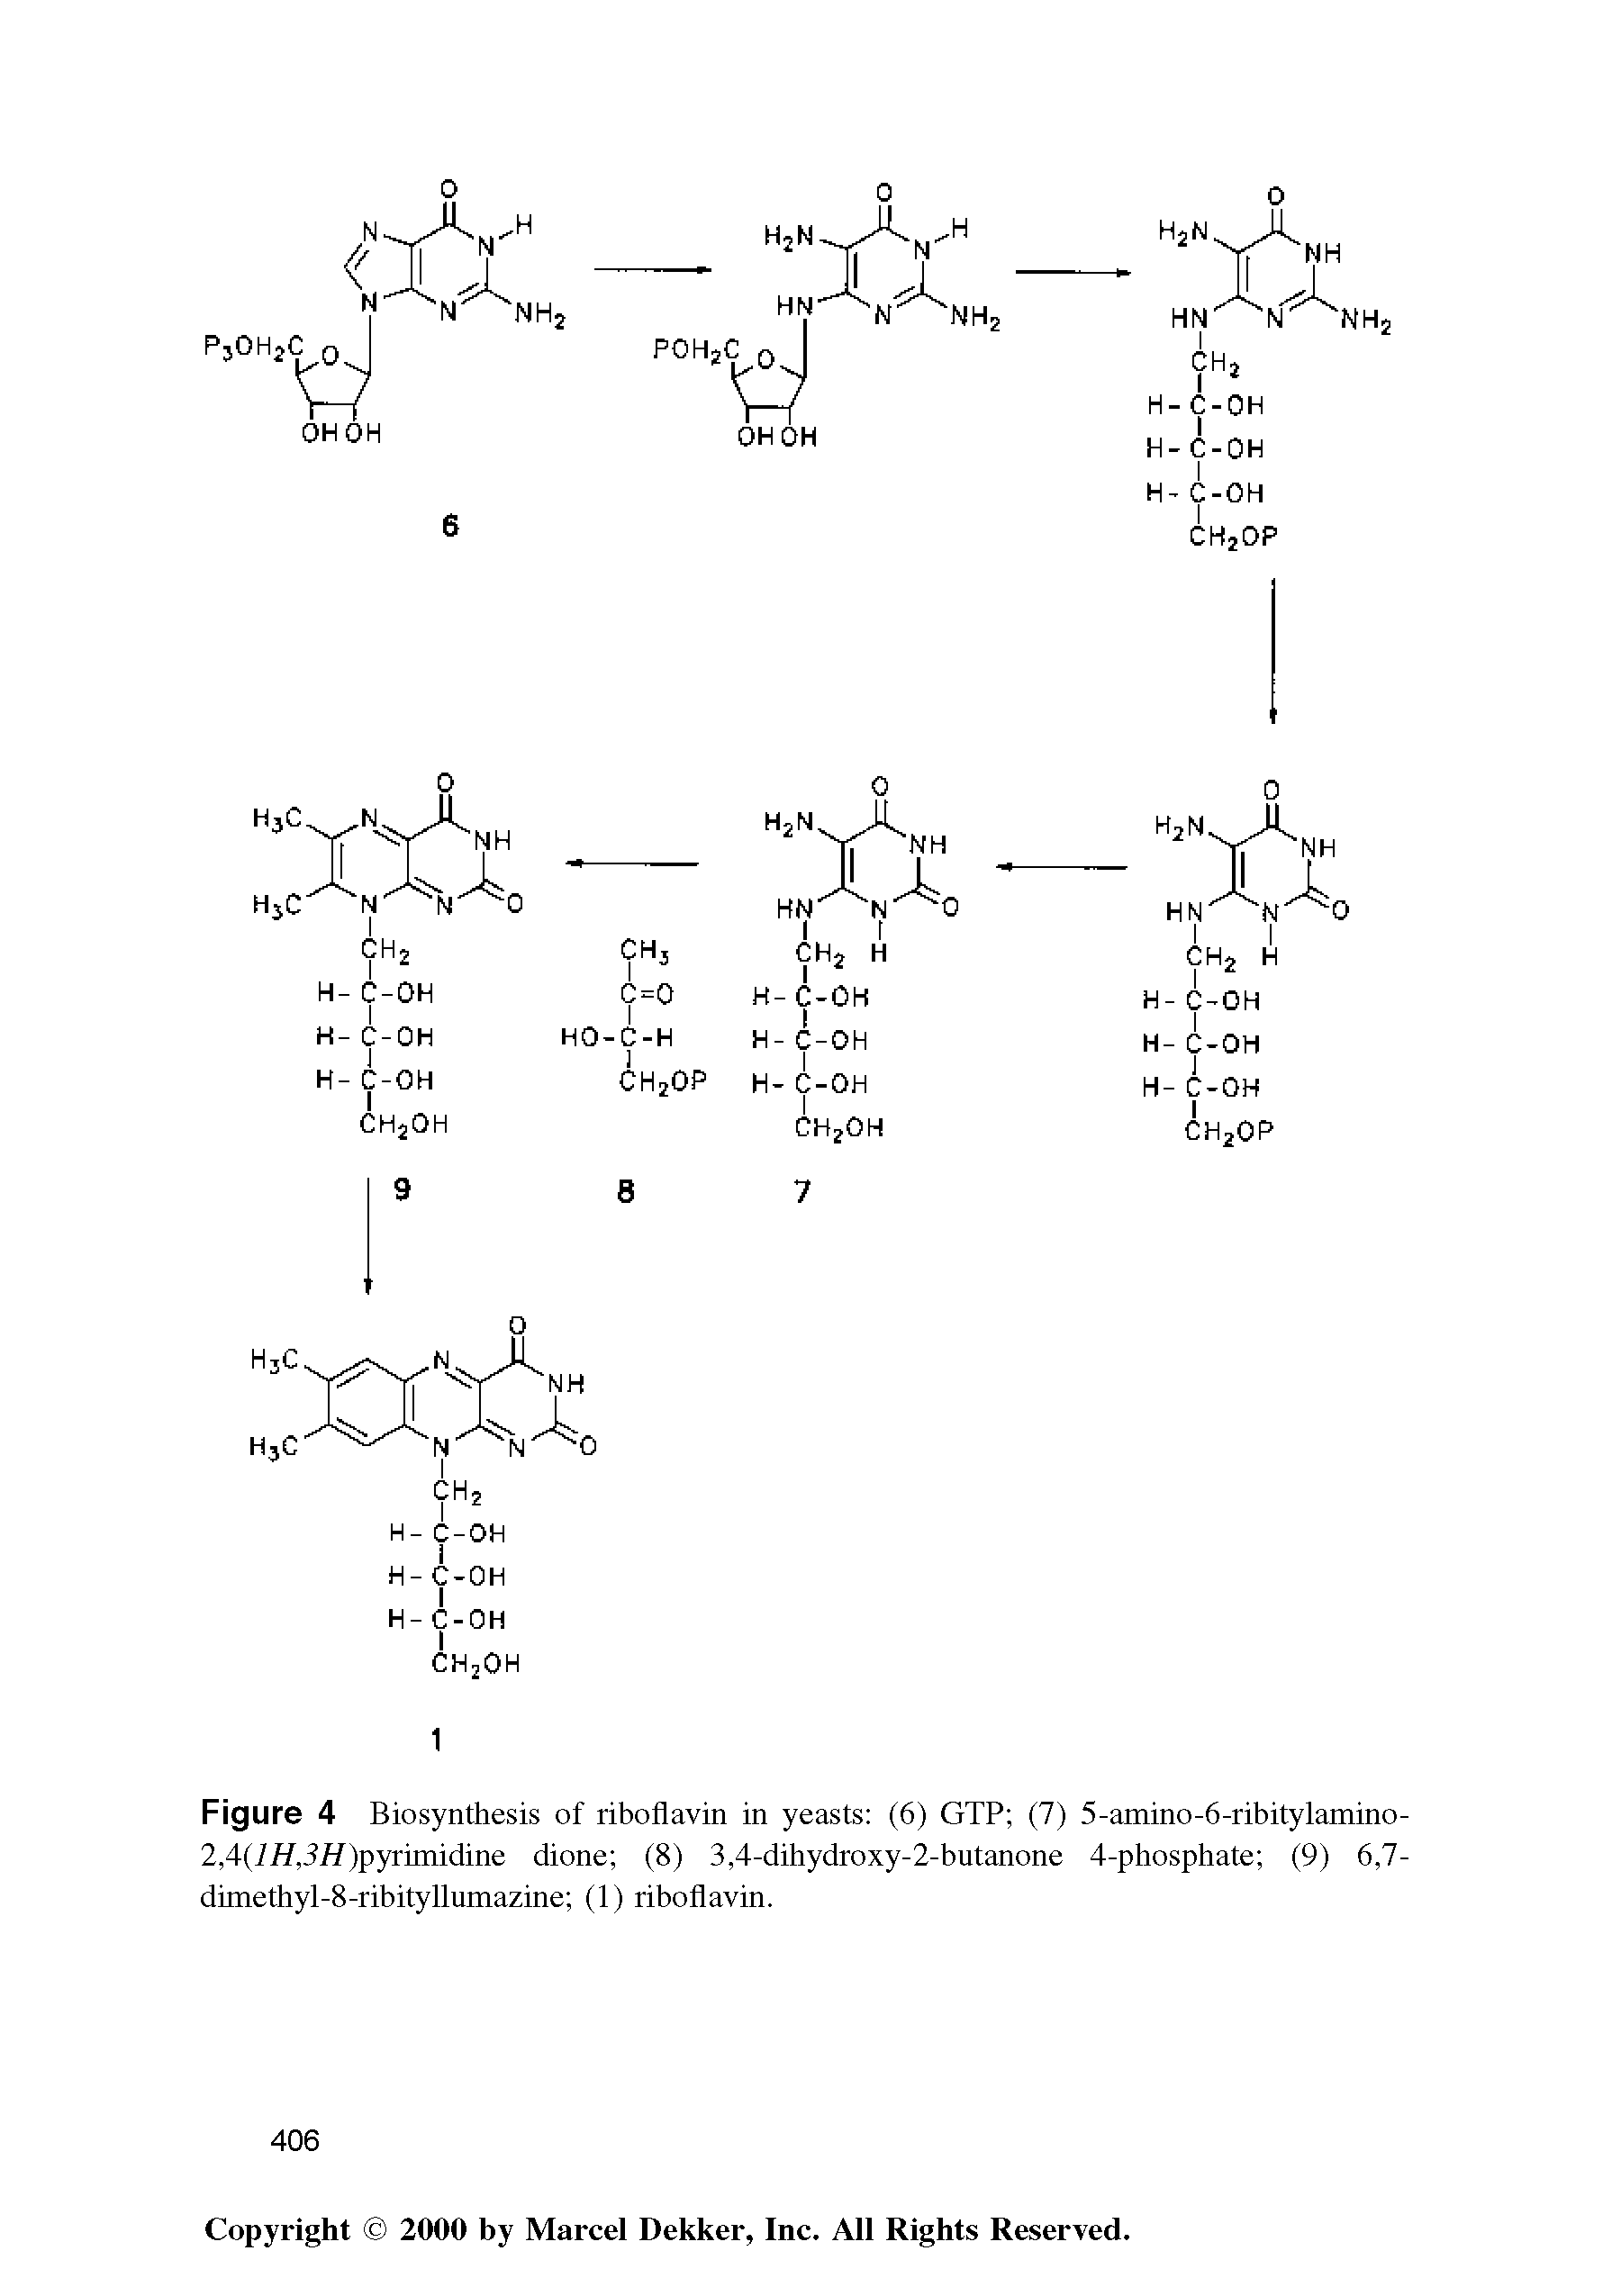 Figure 4 Biosynthesis of riboflavin in yeasts (6) GTP (7) 5-amino-6-ribitylamino-2,4(i//,7//)pyrimidine dione (8) 3,4-dihydroxy-2-butanone 4-phosphate (9) 6,7-dimethyl-8-ribityllumazine (1) riboflavin.